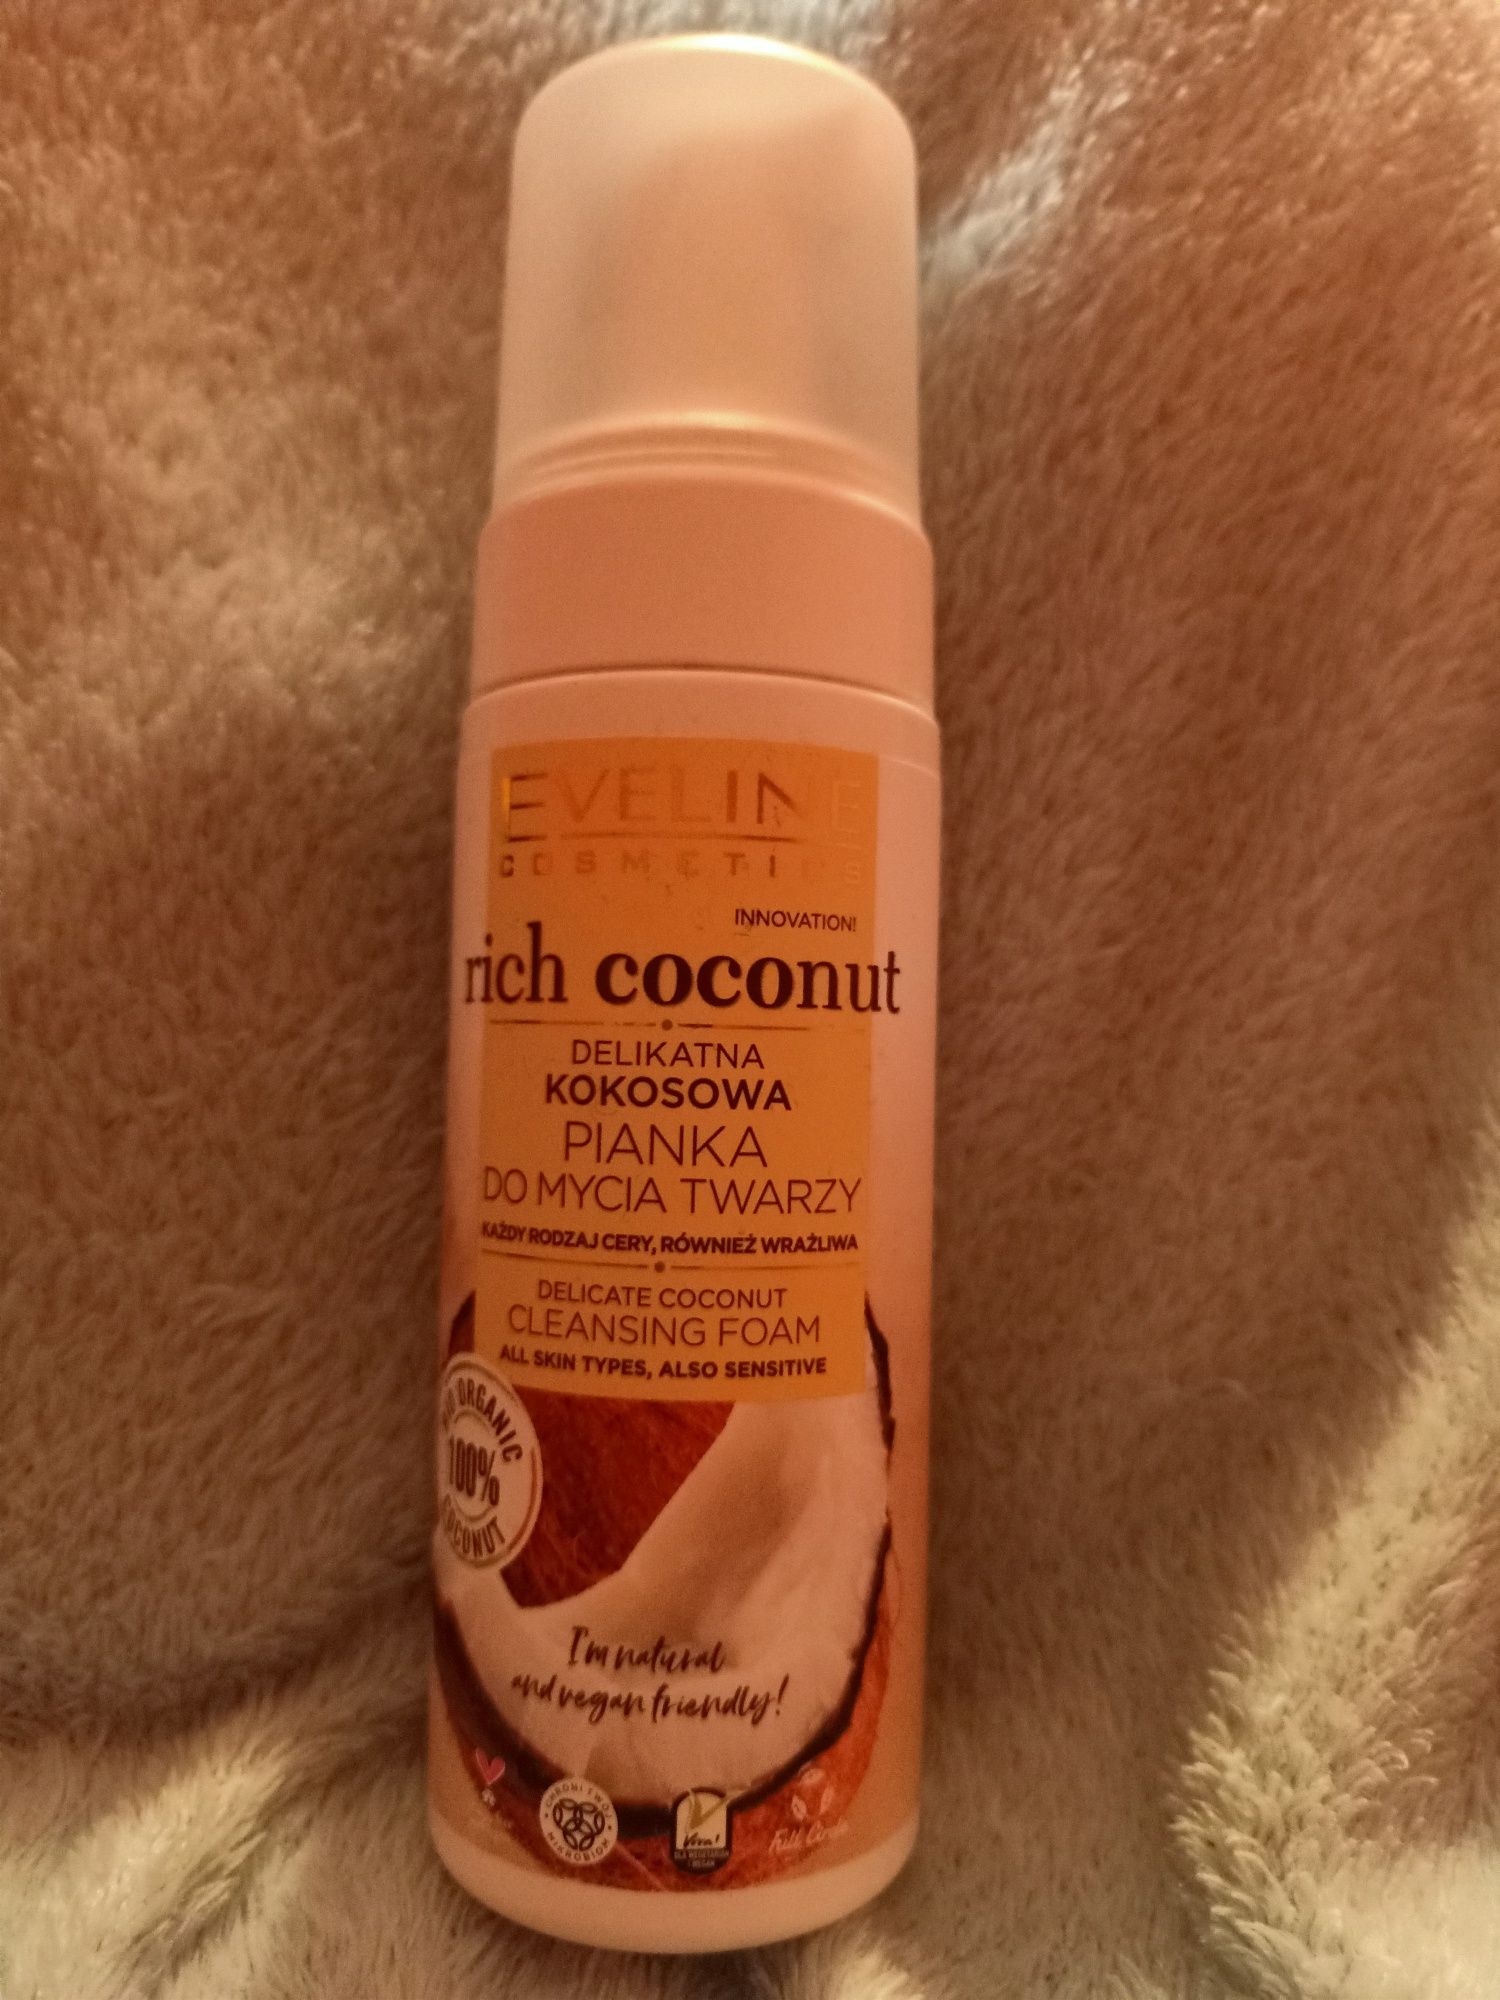 Eveline Cosmetics Rich Coconut delikatna pianka do mycia twarzy